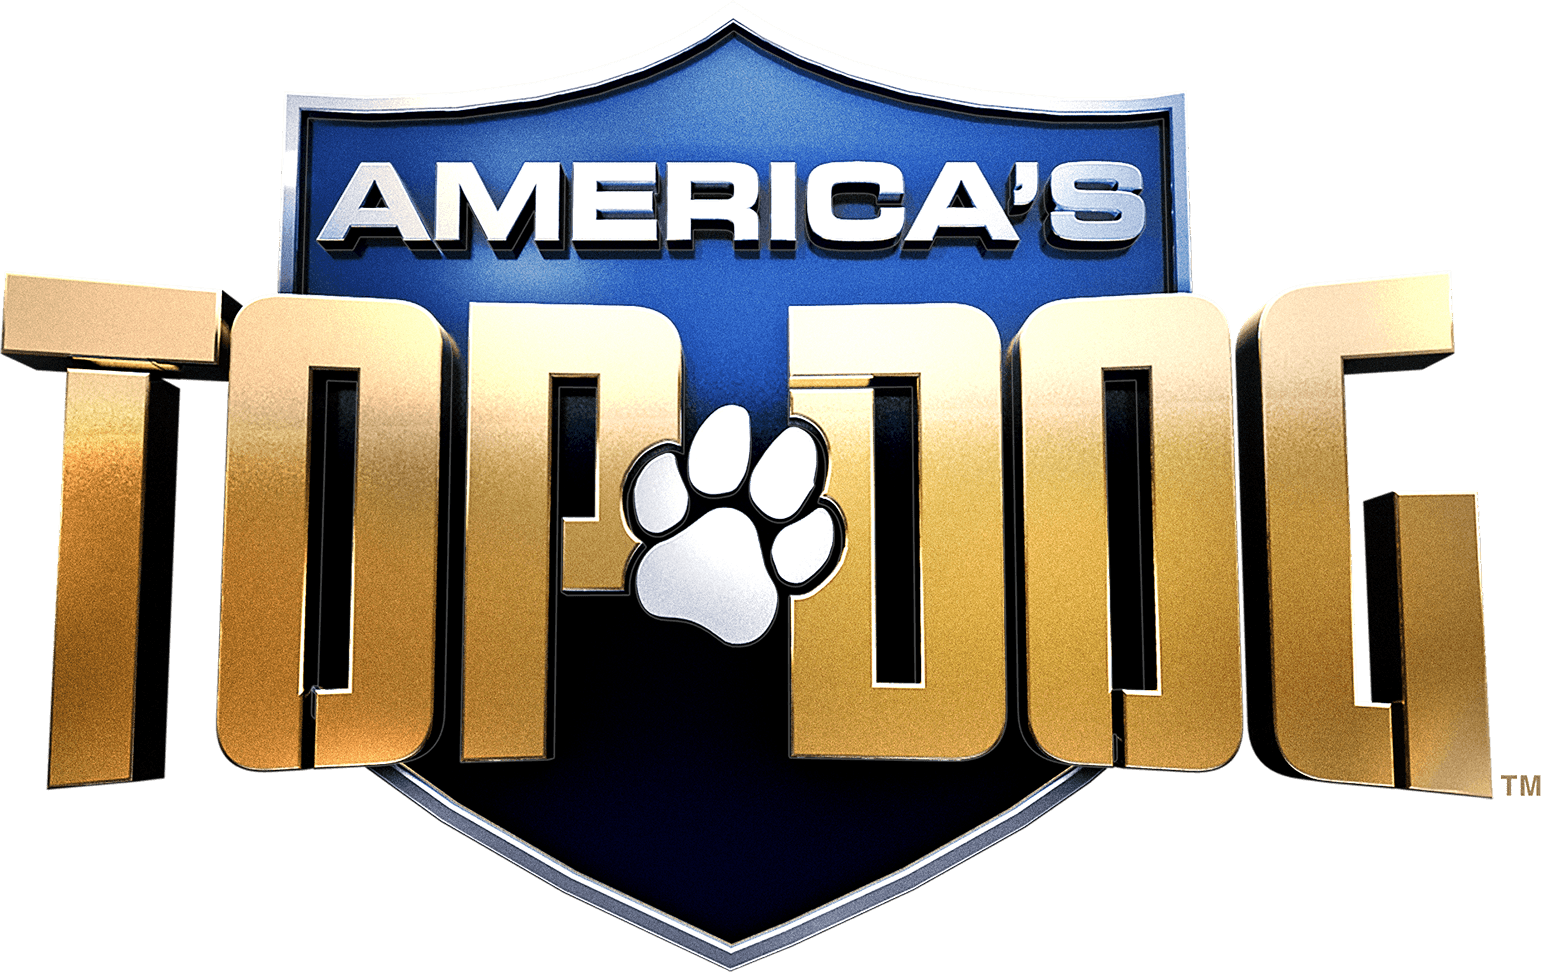 America's Top Dog logo